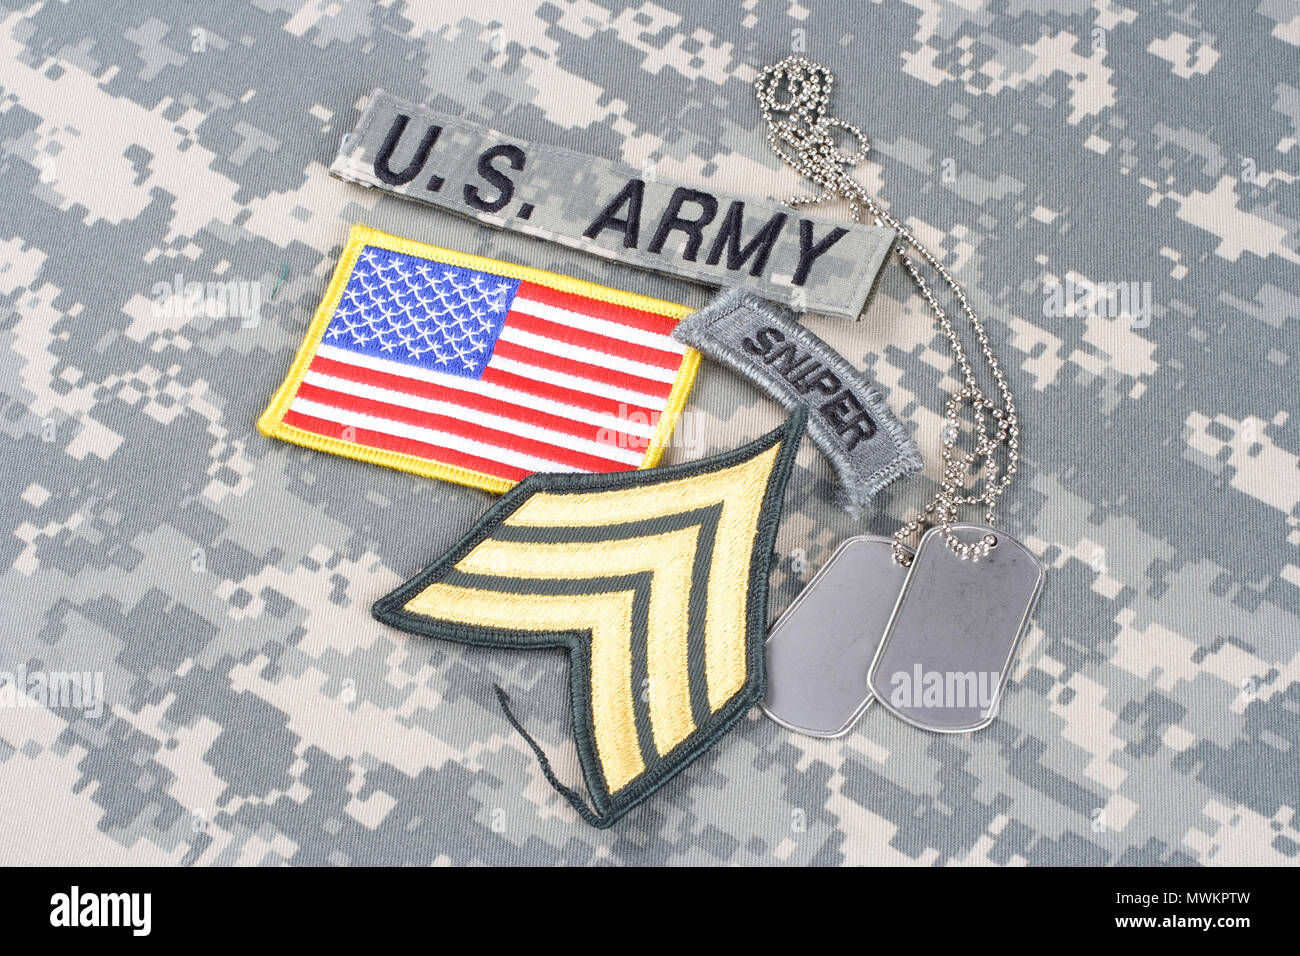 KIEV, UKRAINE - August 21, 2015. US ARMY sniper insignia on camouflage uniform Stock Photo